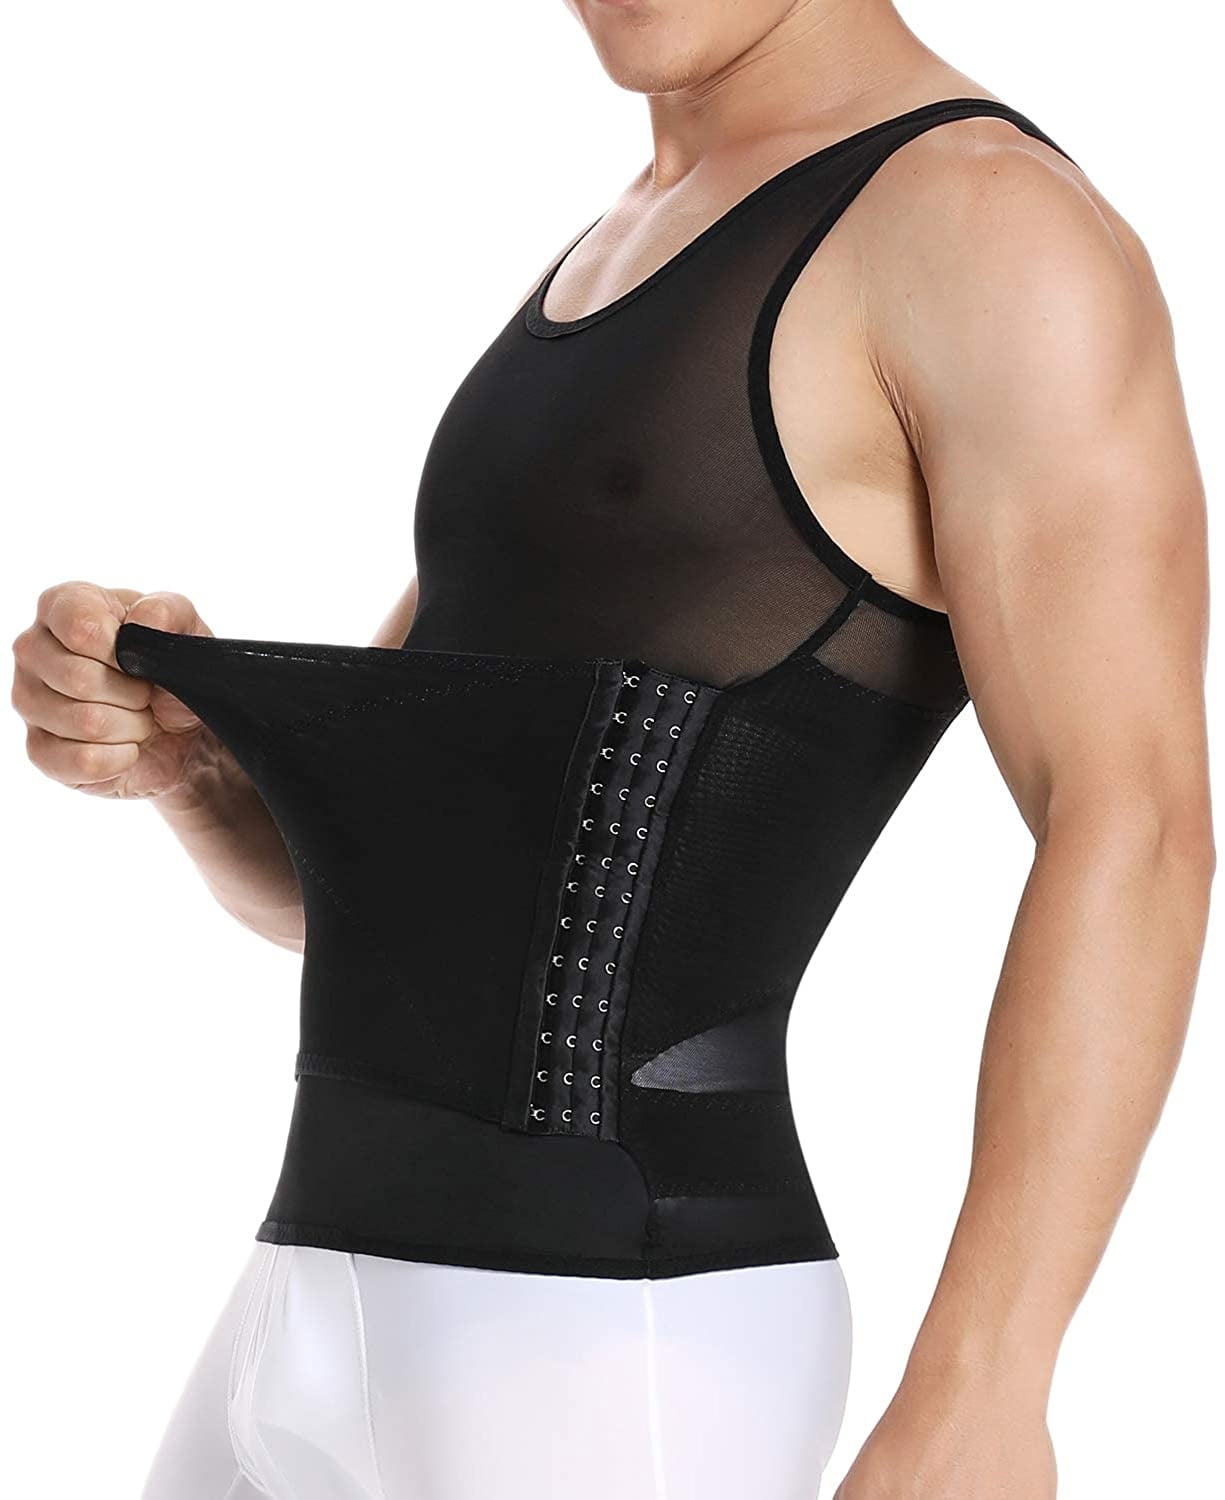 Men Compression Vest Slimming Body Shaper Chest Tummy Control Shapewear Waist Trainer Girdle Belt Posture Corrector Tank Top White XL